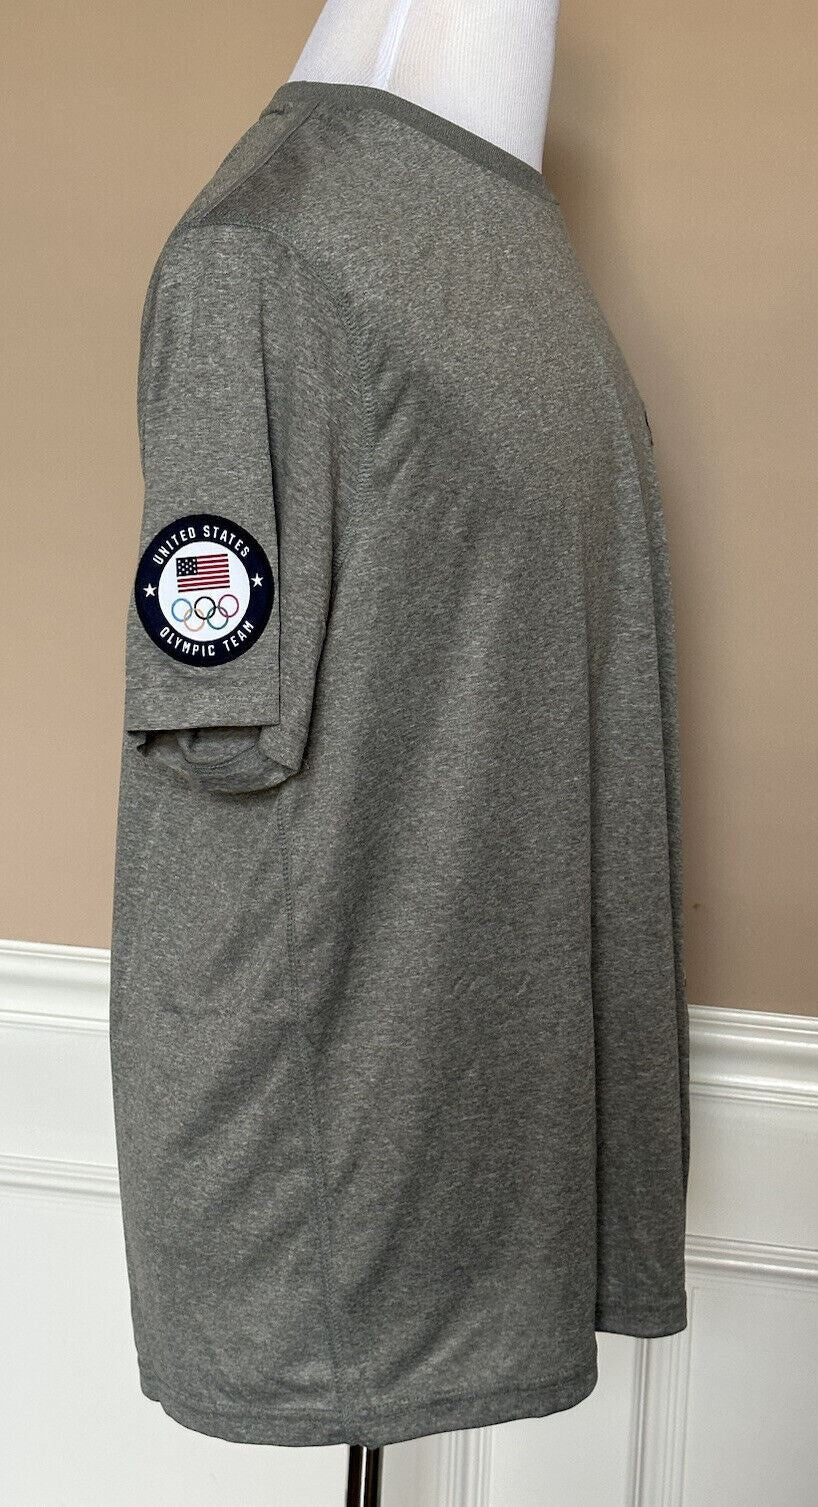 NWT $59.50 Polo Ralph Lauren USA Team Short Sleeve Stretch T-shirt Grey L